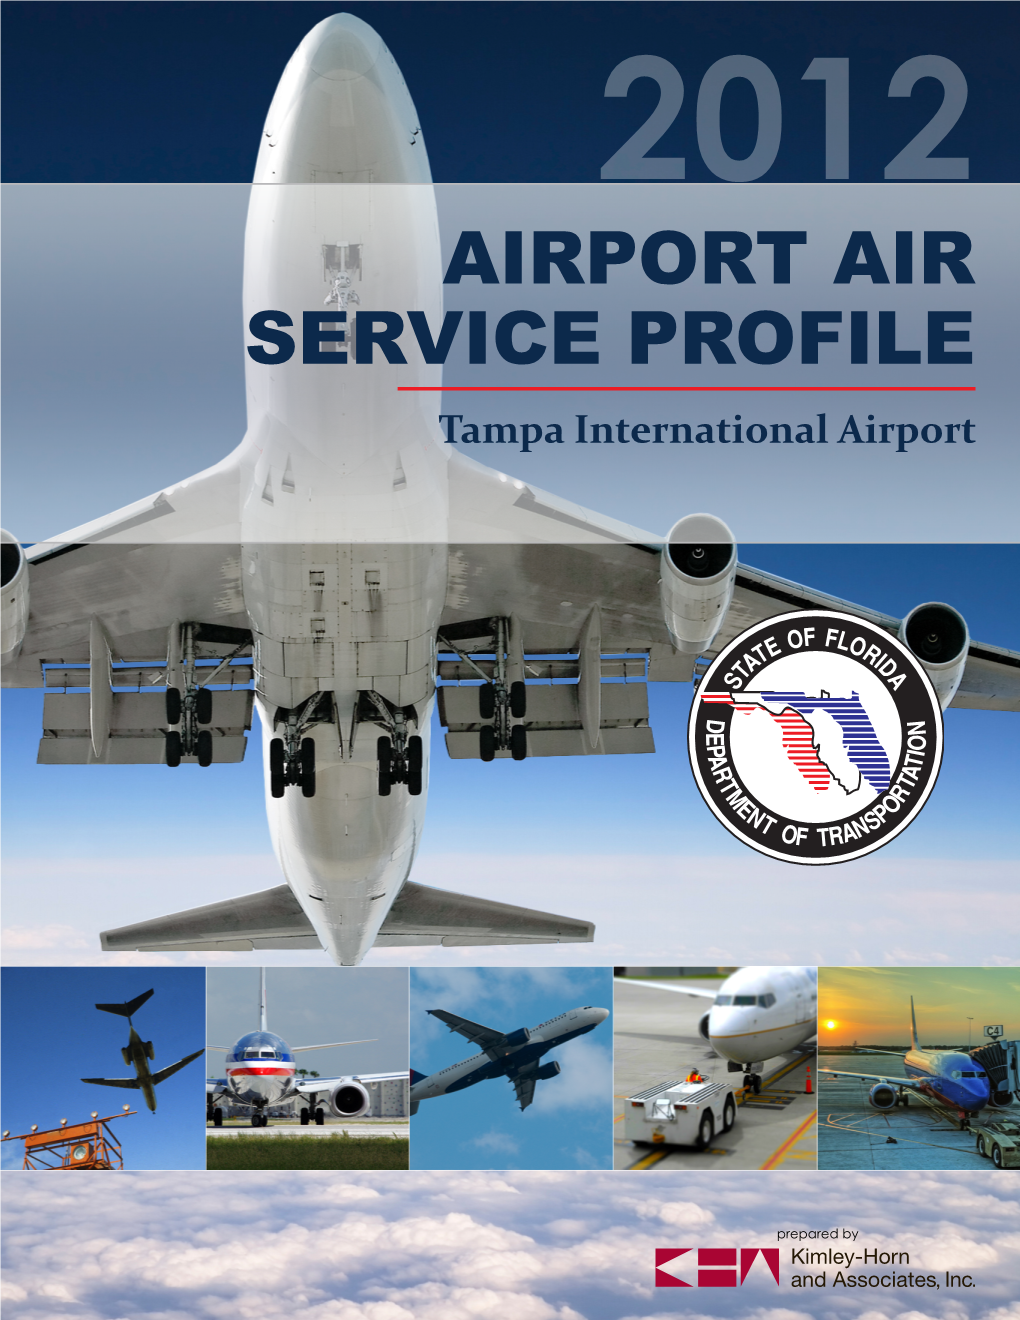 AIRPORT AIR SERVICE PROFILE Tampa International Airport